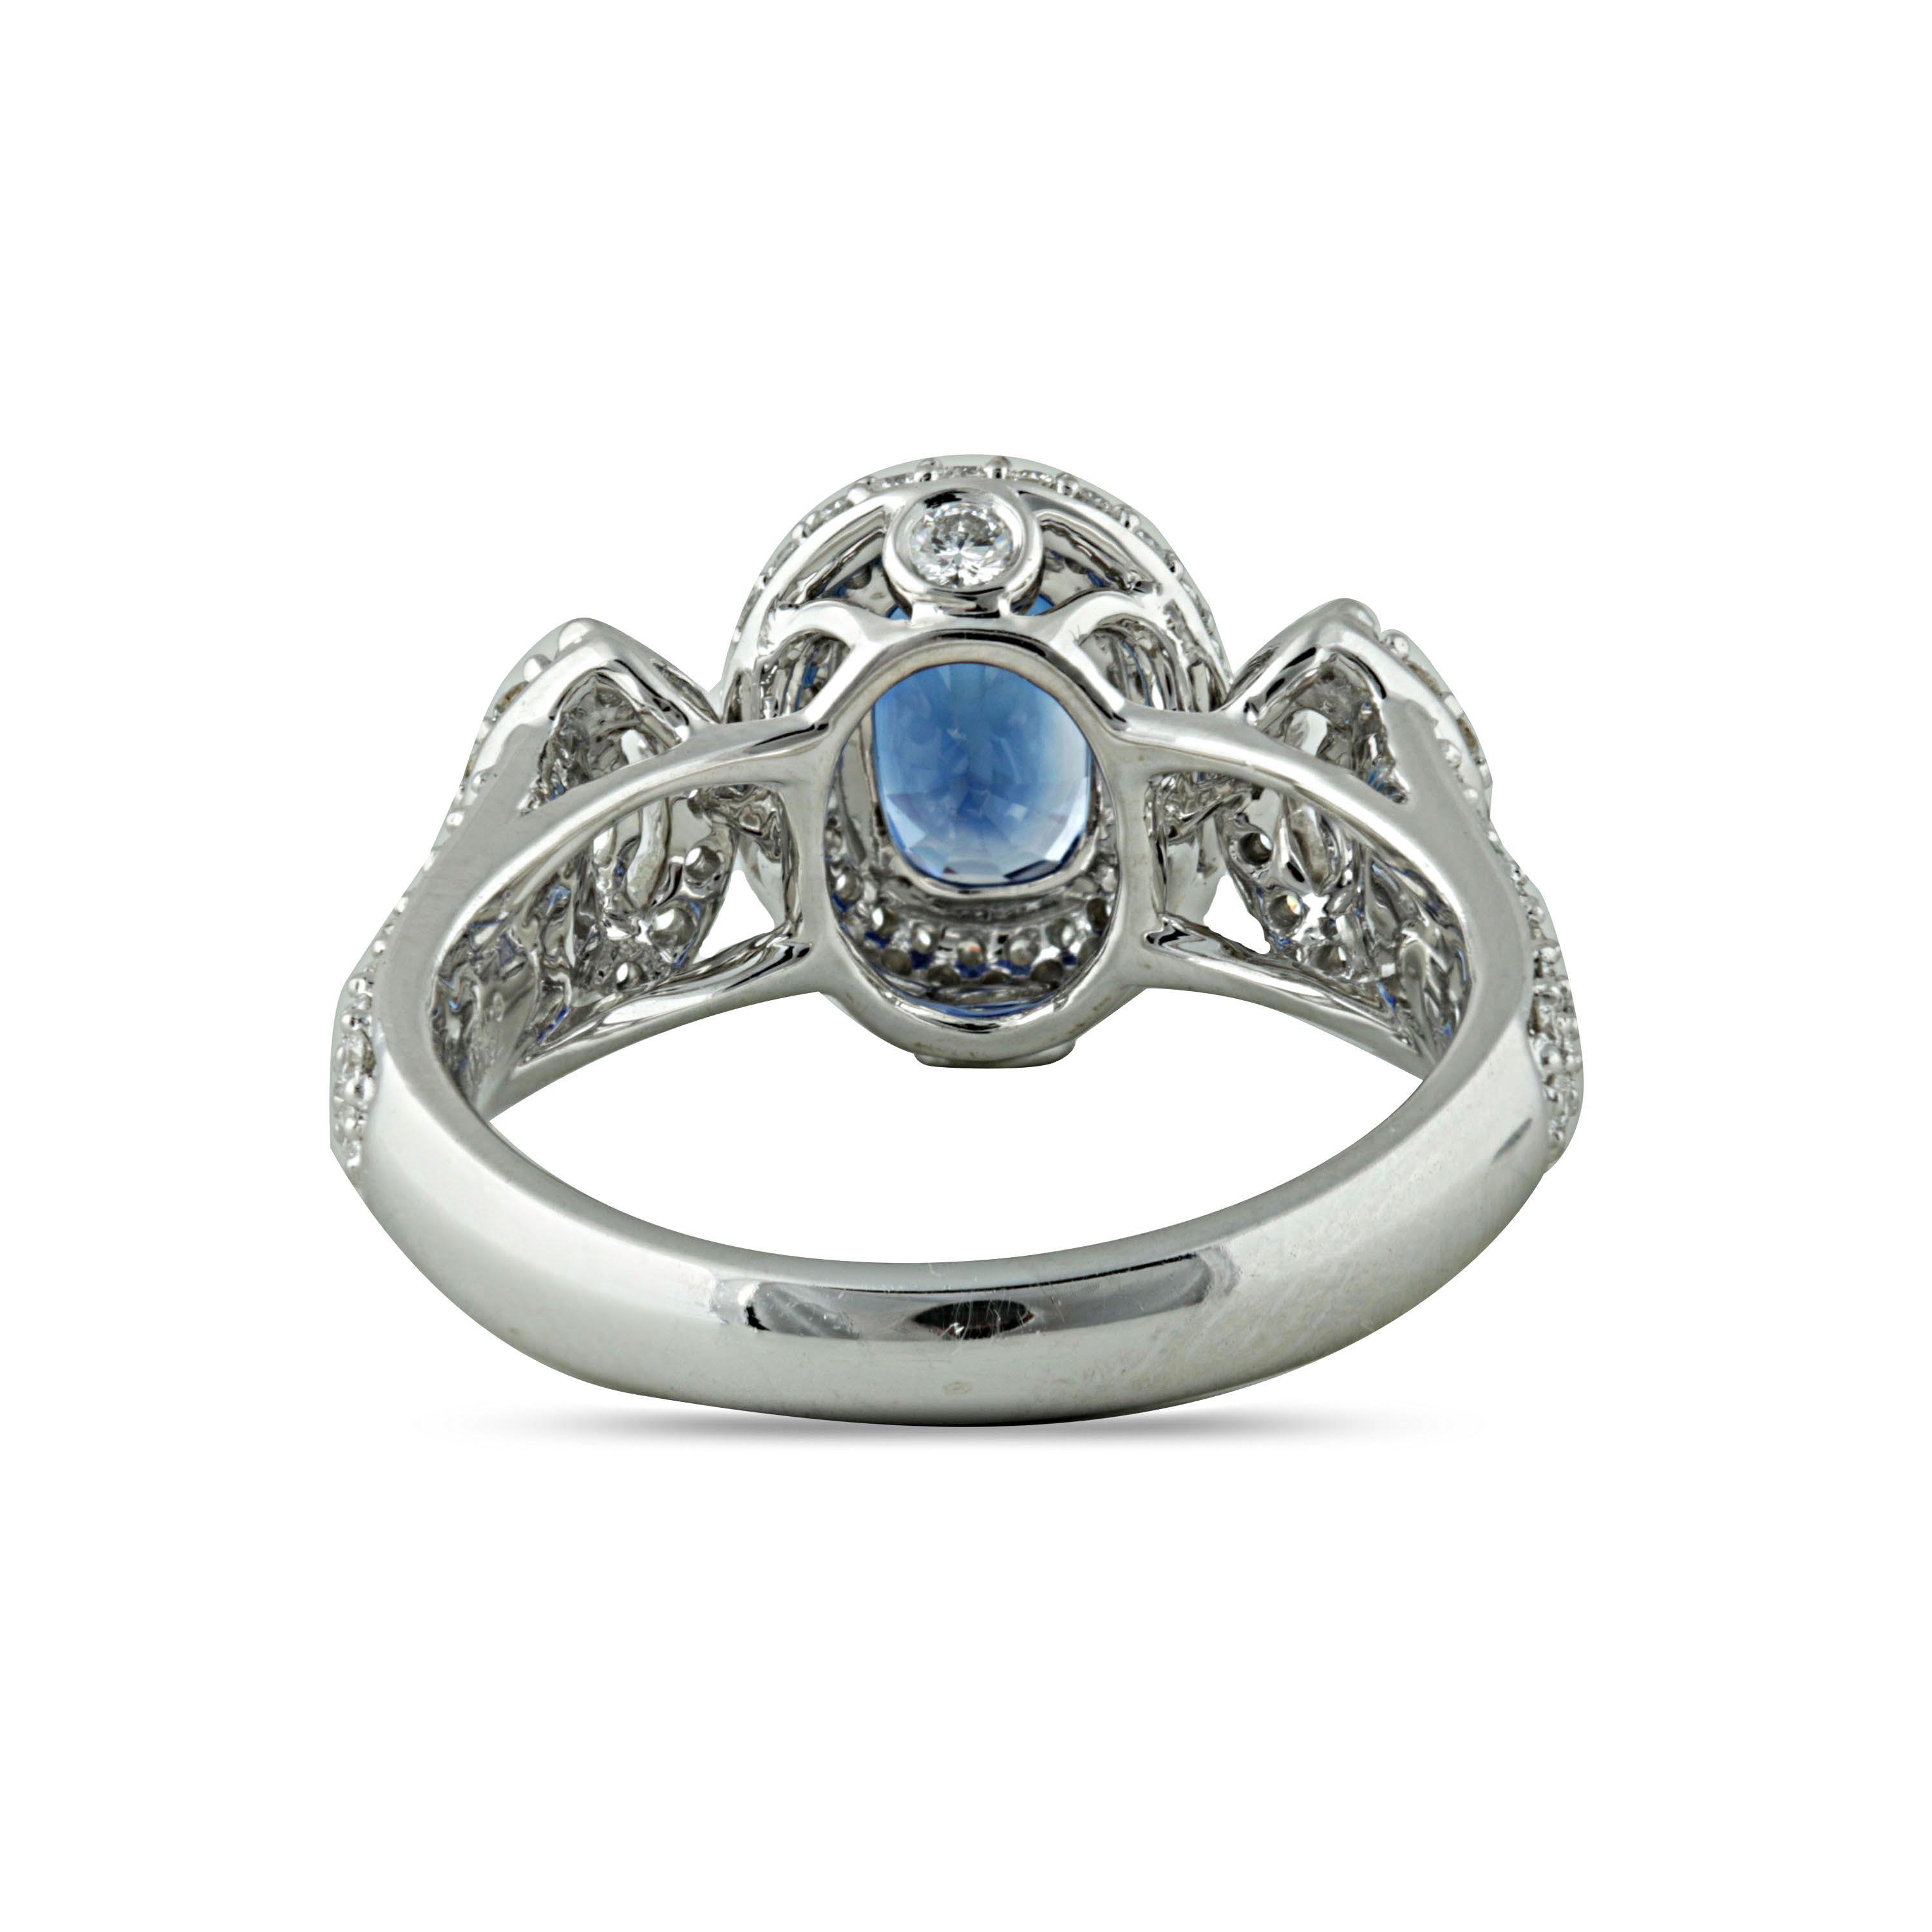 Oval Cut Studio Rêves 1.68 Carat Blue Sapphire and Diamond Ring in 18 Karat White Gold